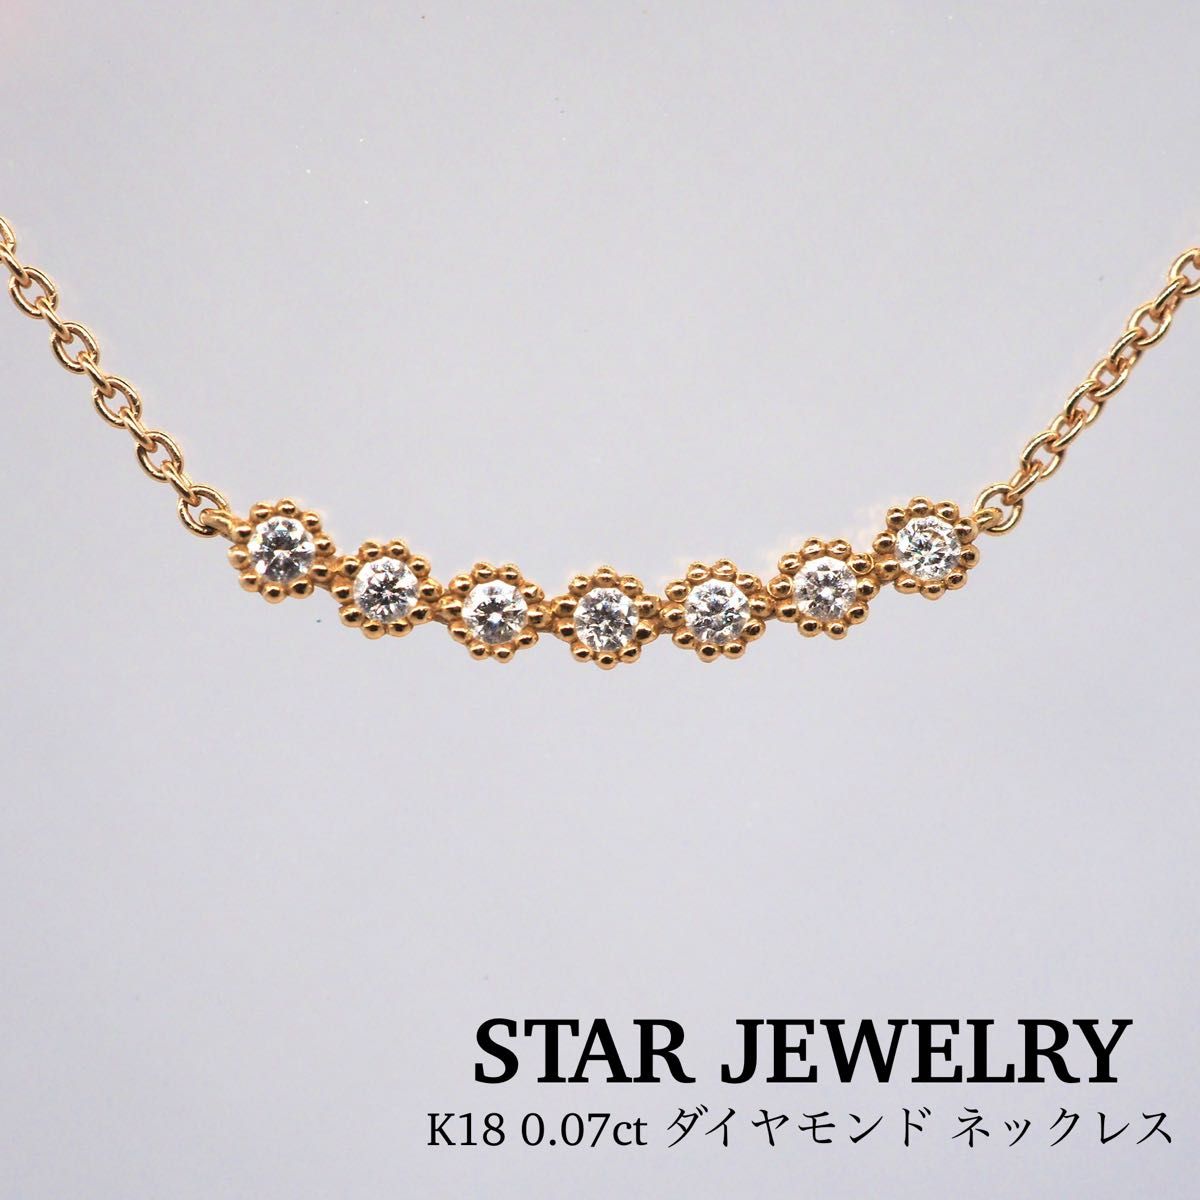 【STAR JEWELRY】K18 0.07ct ダイヤモンドラインネックレス